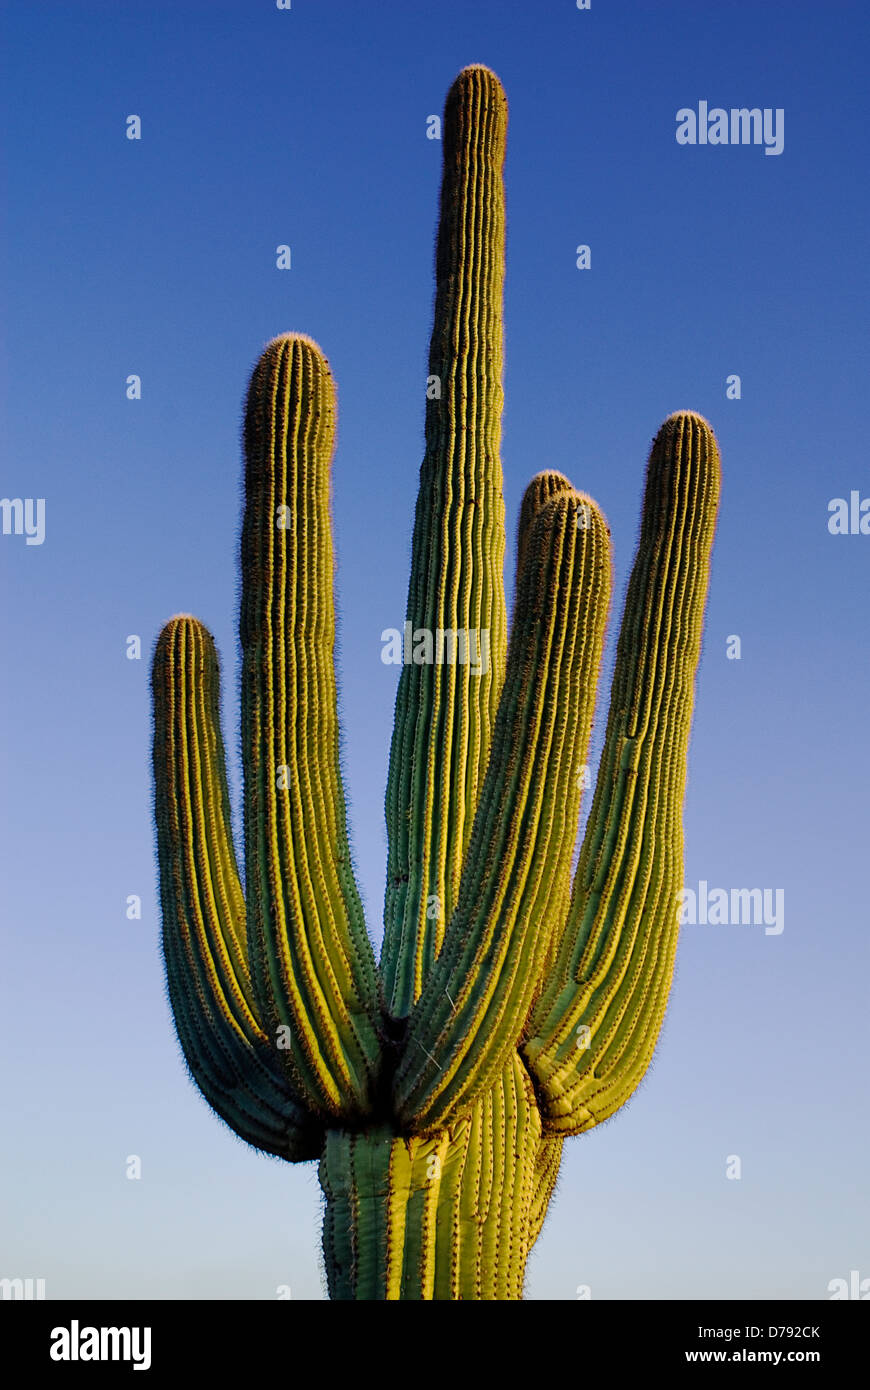 USA, Arizona, Saguaro National Park, Ridged branches of Giant Saguaro cactus, Carnegiea gigantea, against blue sky. Stock Photo